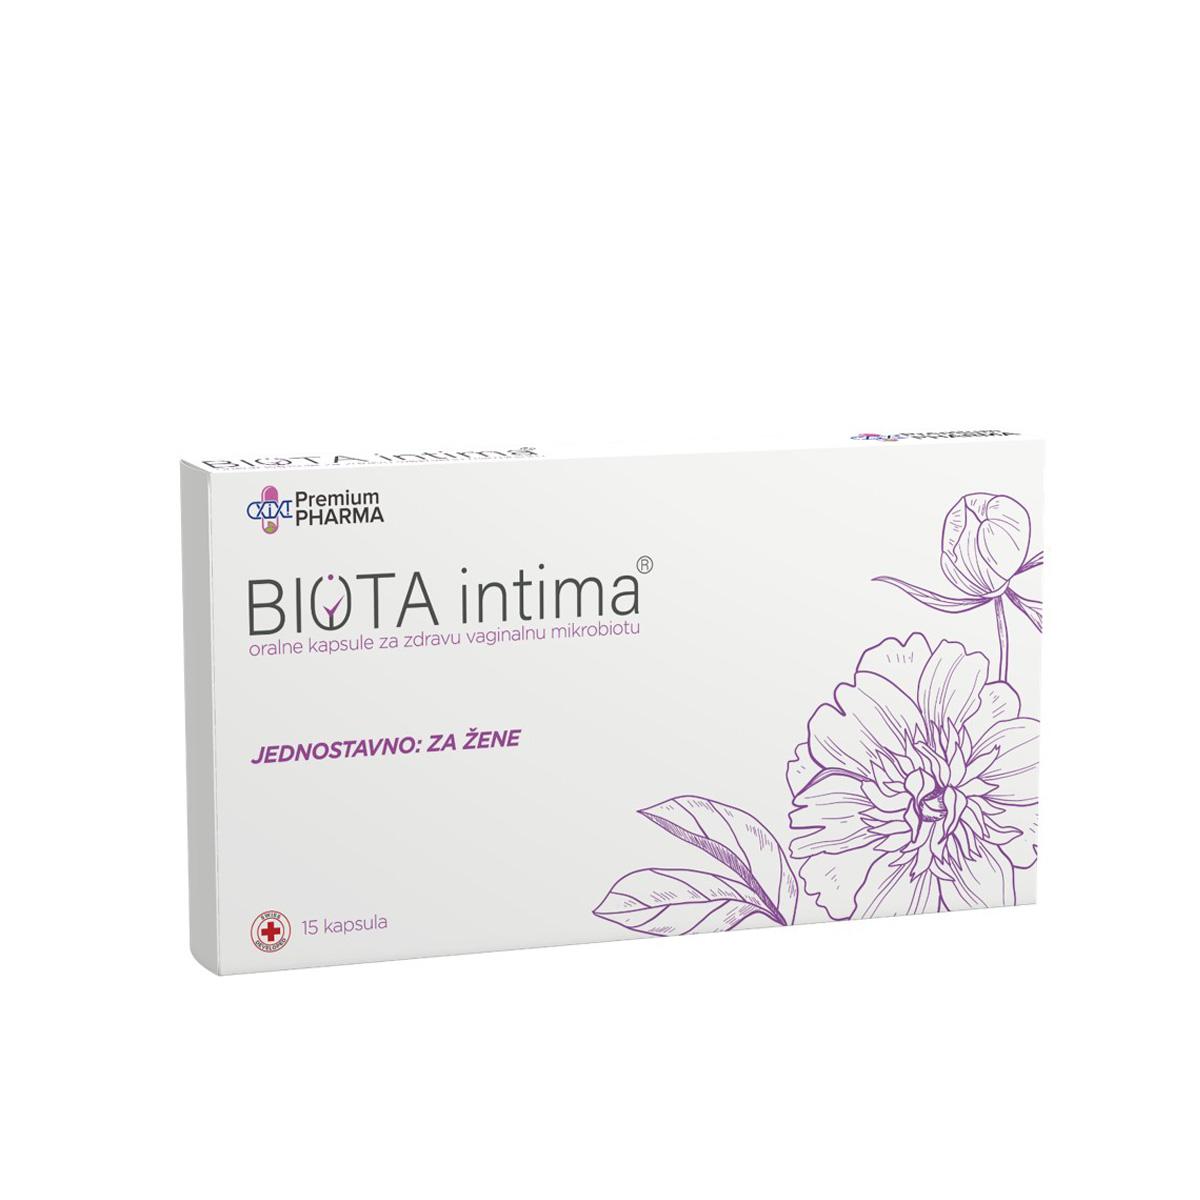 Selected image for PREMIUM PHARMA Kompleks za zdravu vaginalnu mikrobiotBiota Intima 15 kapsula